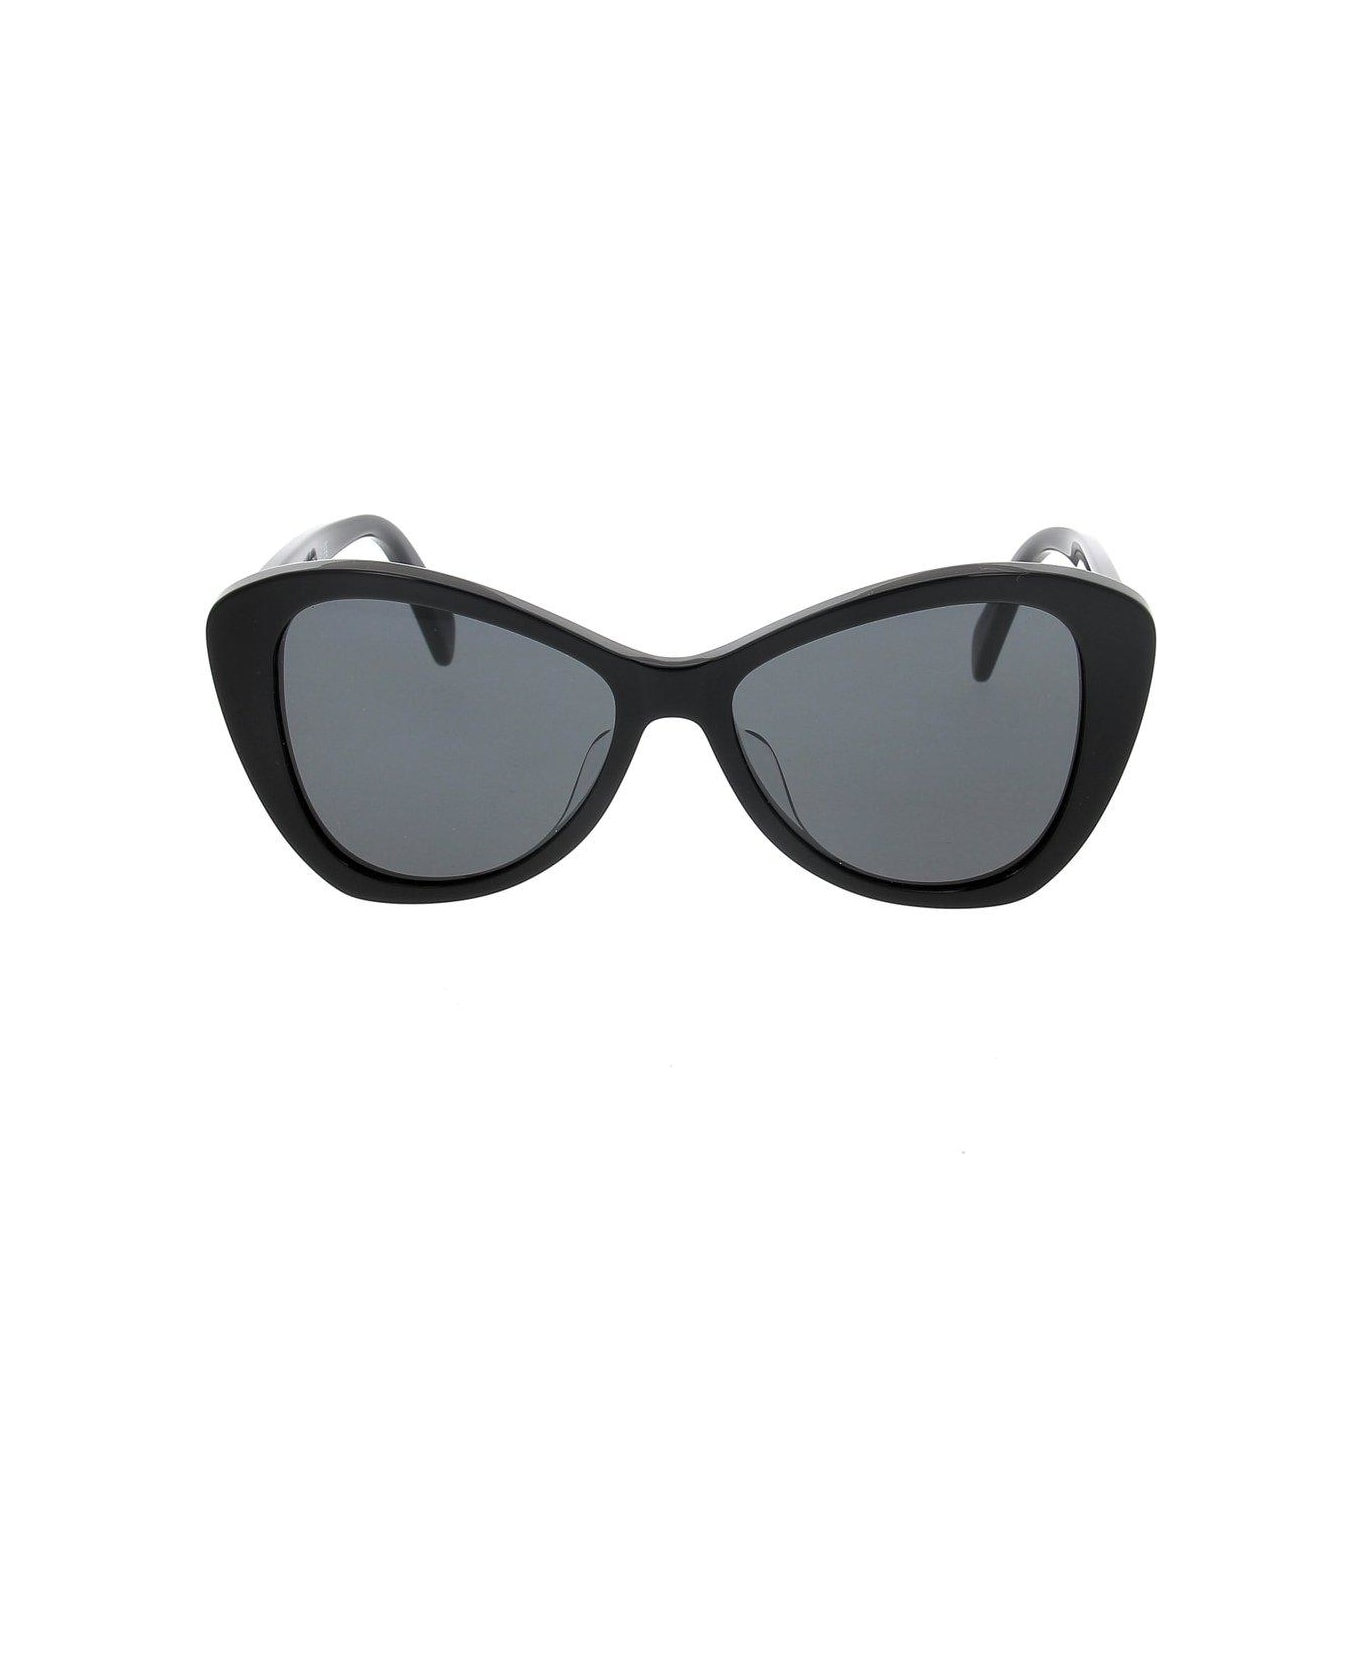 Celine Butterfly Frame Sunglasses - 01a